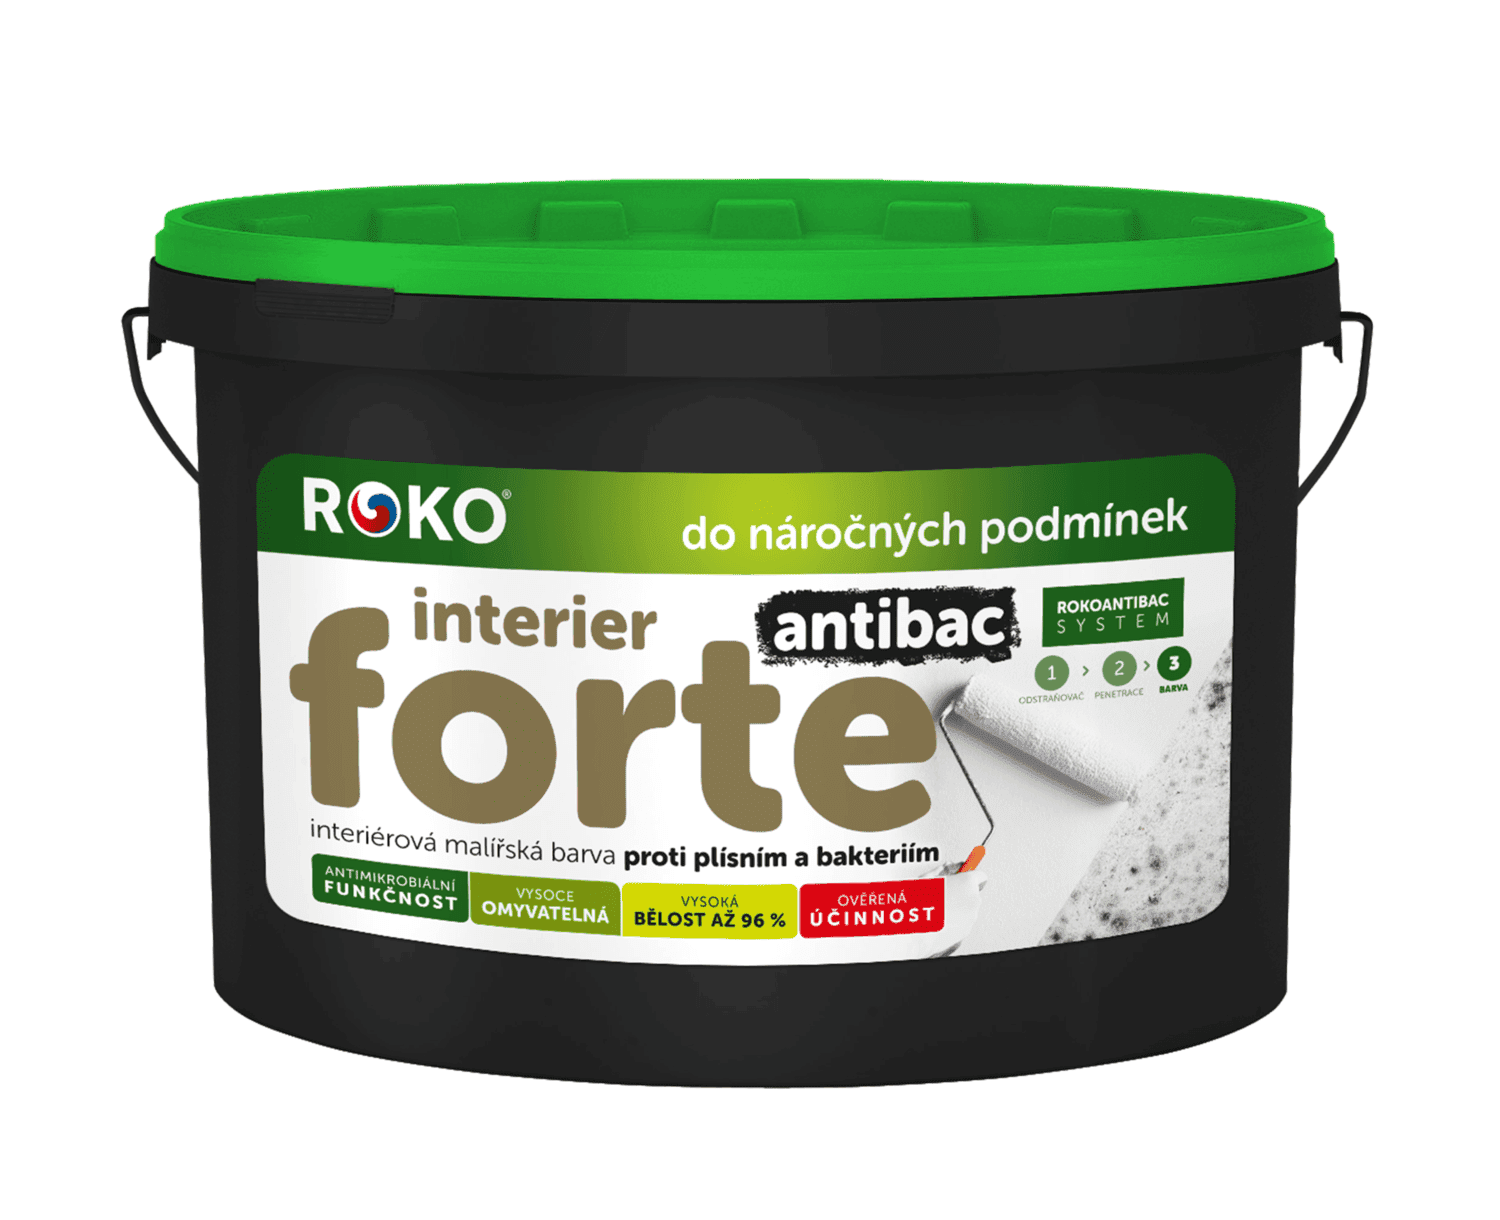 Roko Interier Forte Antibac 15 kg